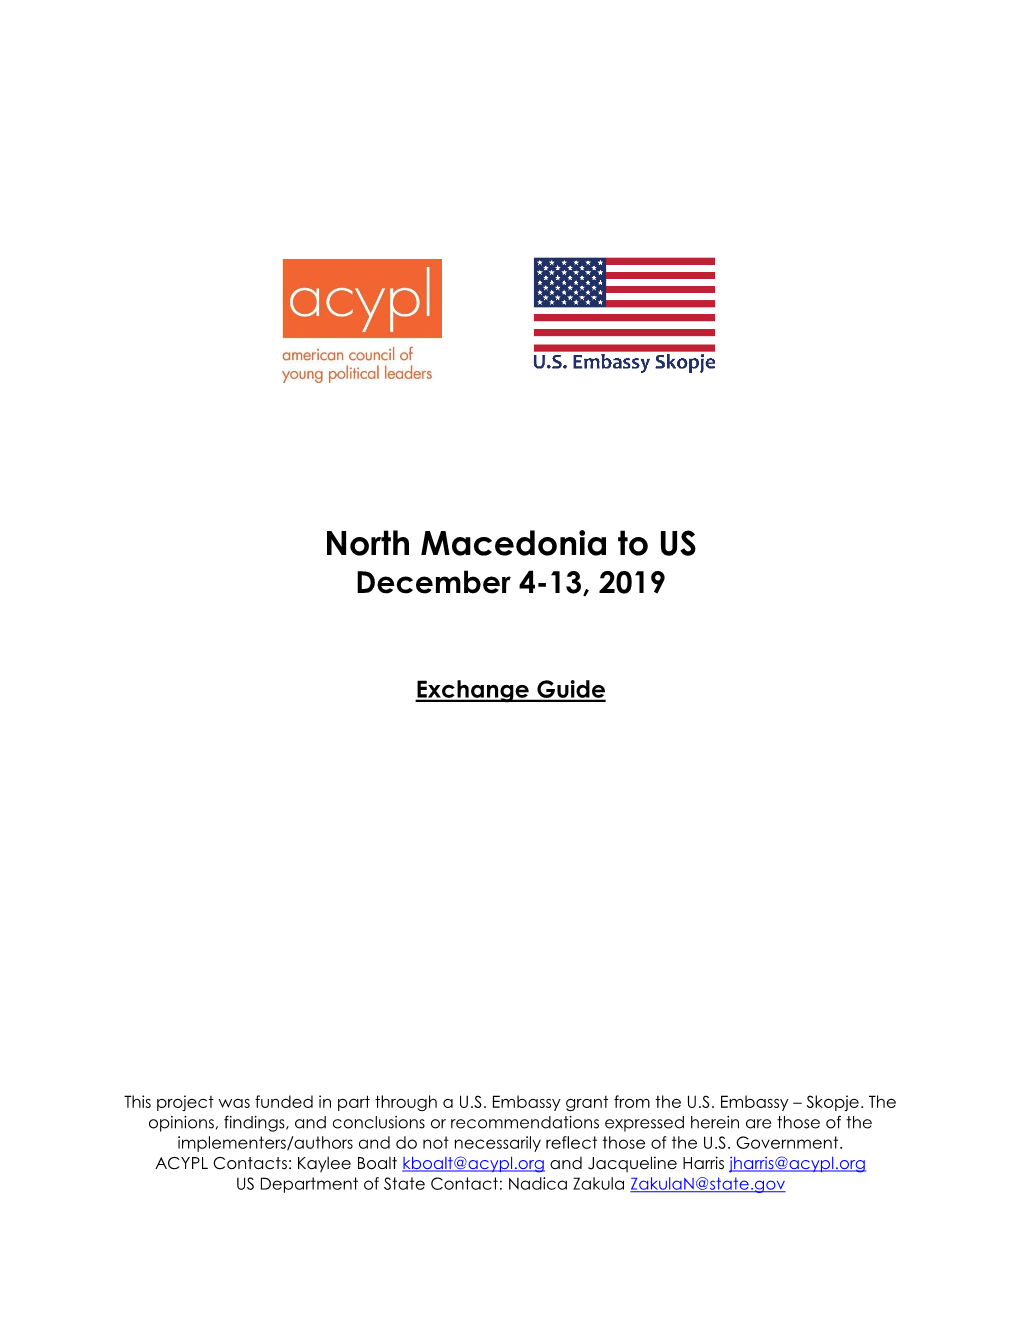 North Macedonia to US December 4-13, 2019